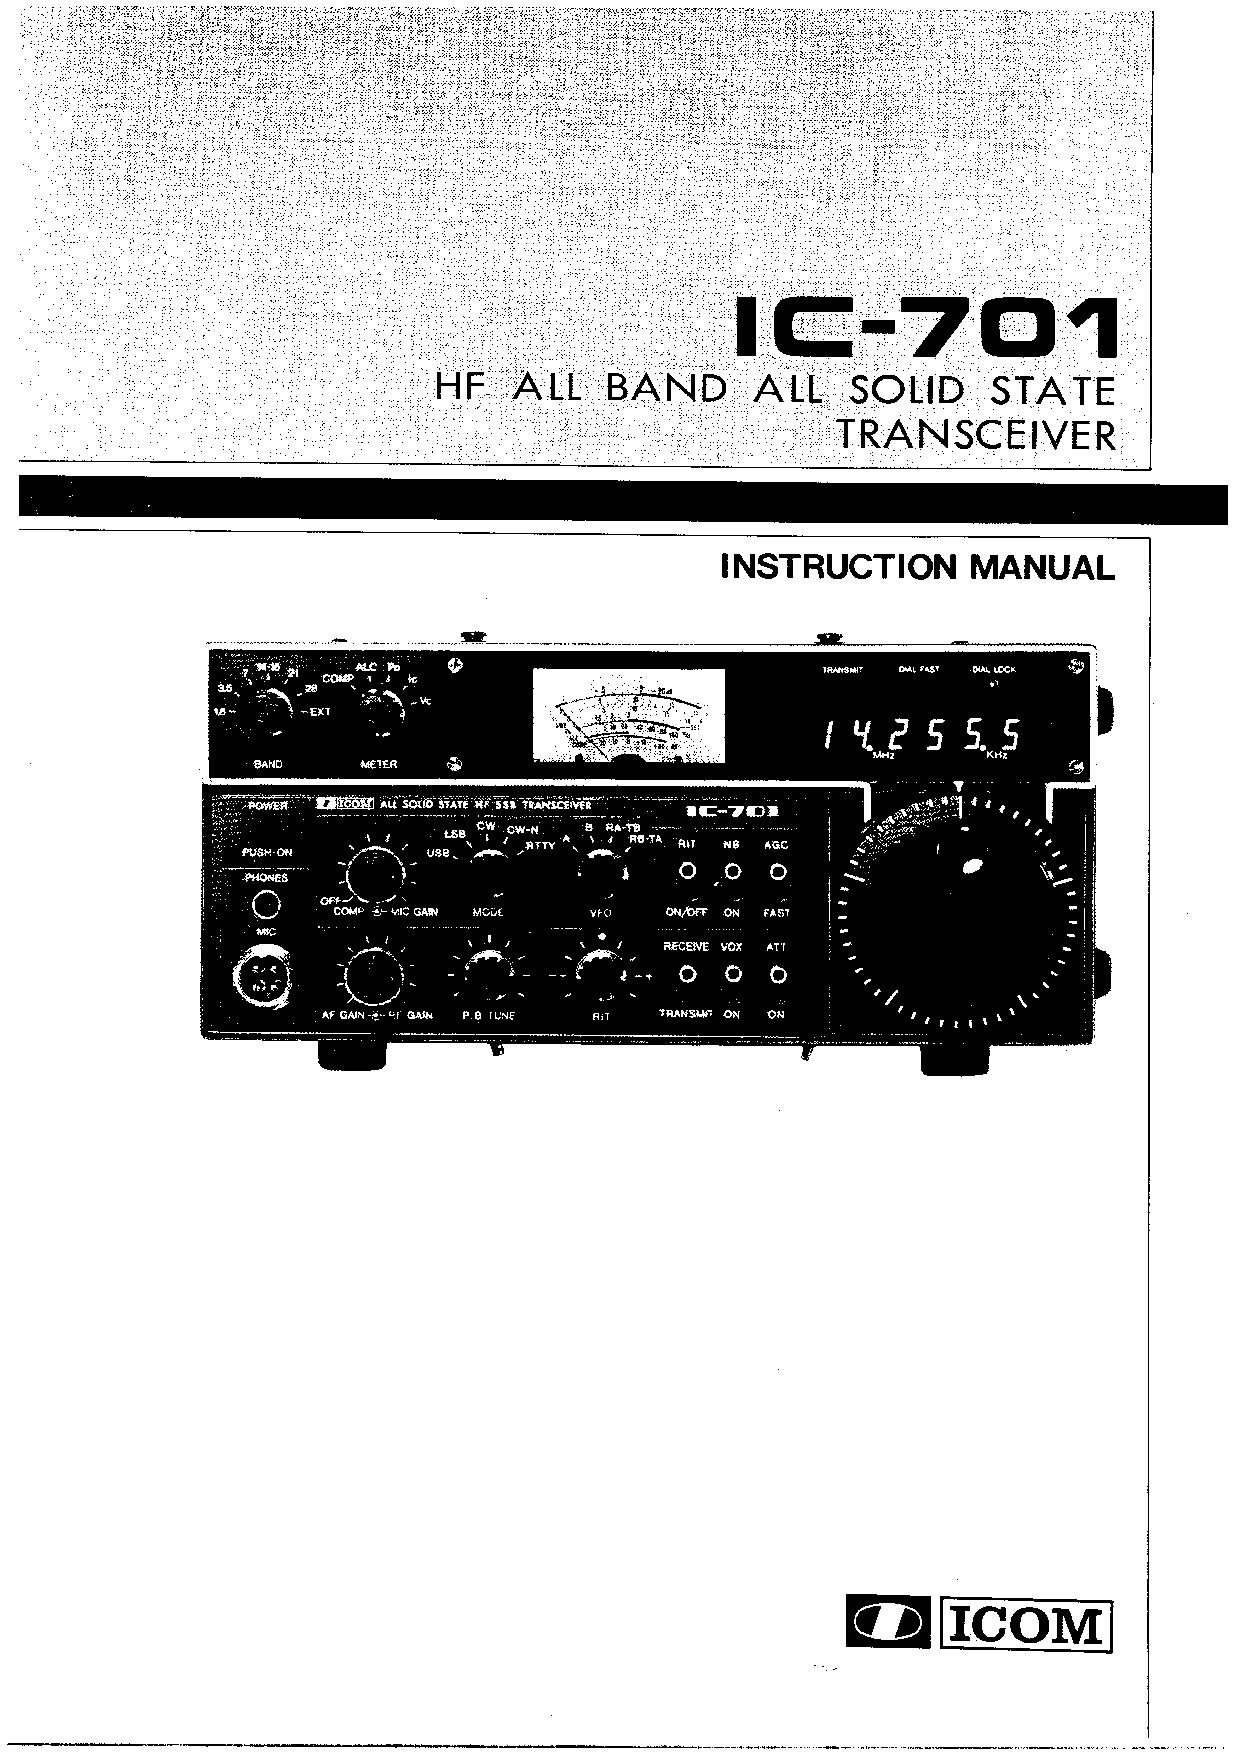 Icom IC-701 User Manual